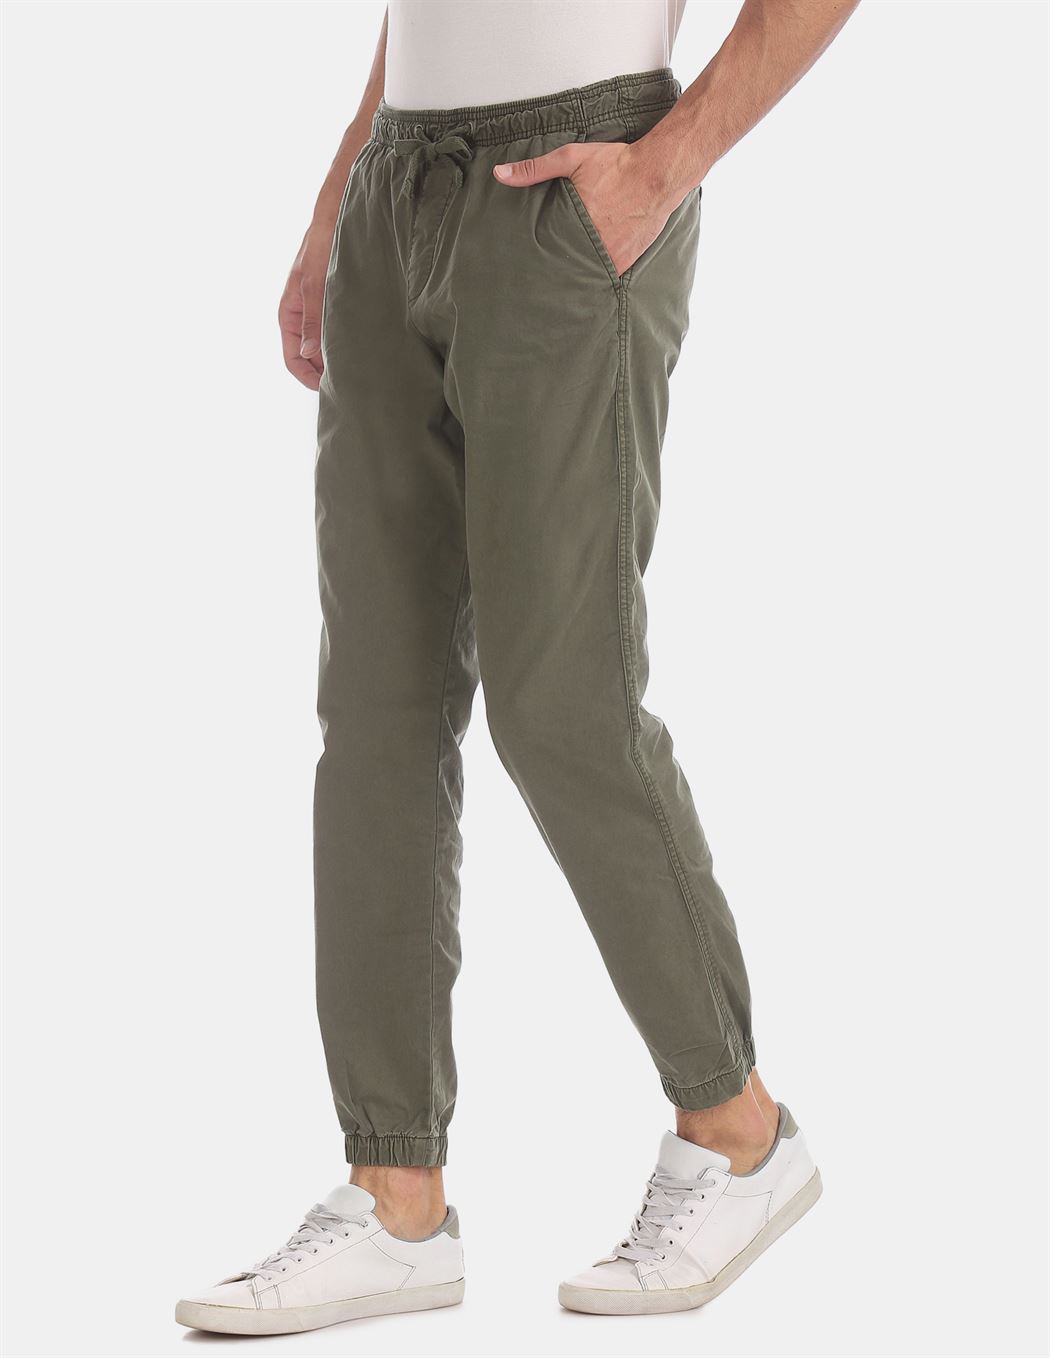 JOGGERS GAP tracksuit pants assorted colors and size  Spain New  The  wholesale platform  Merkandi B2B